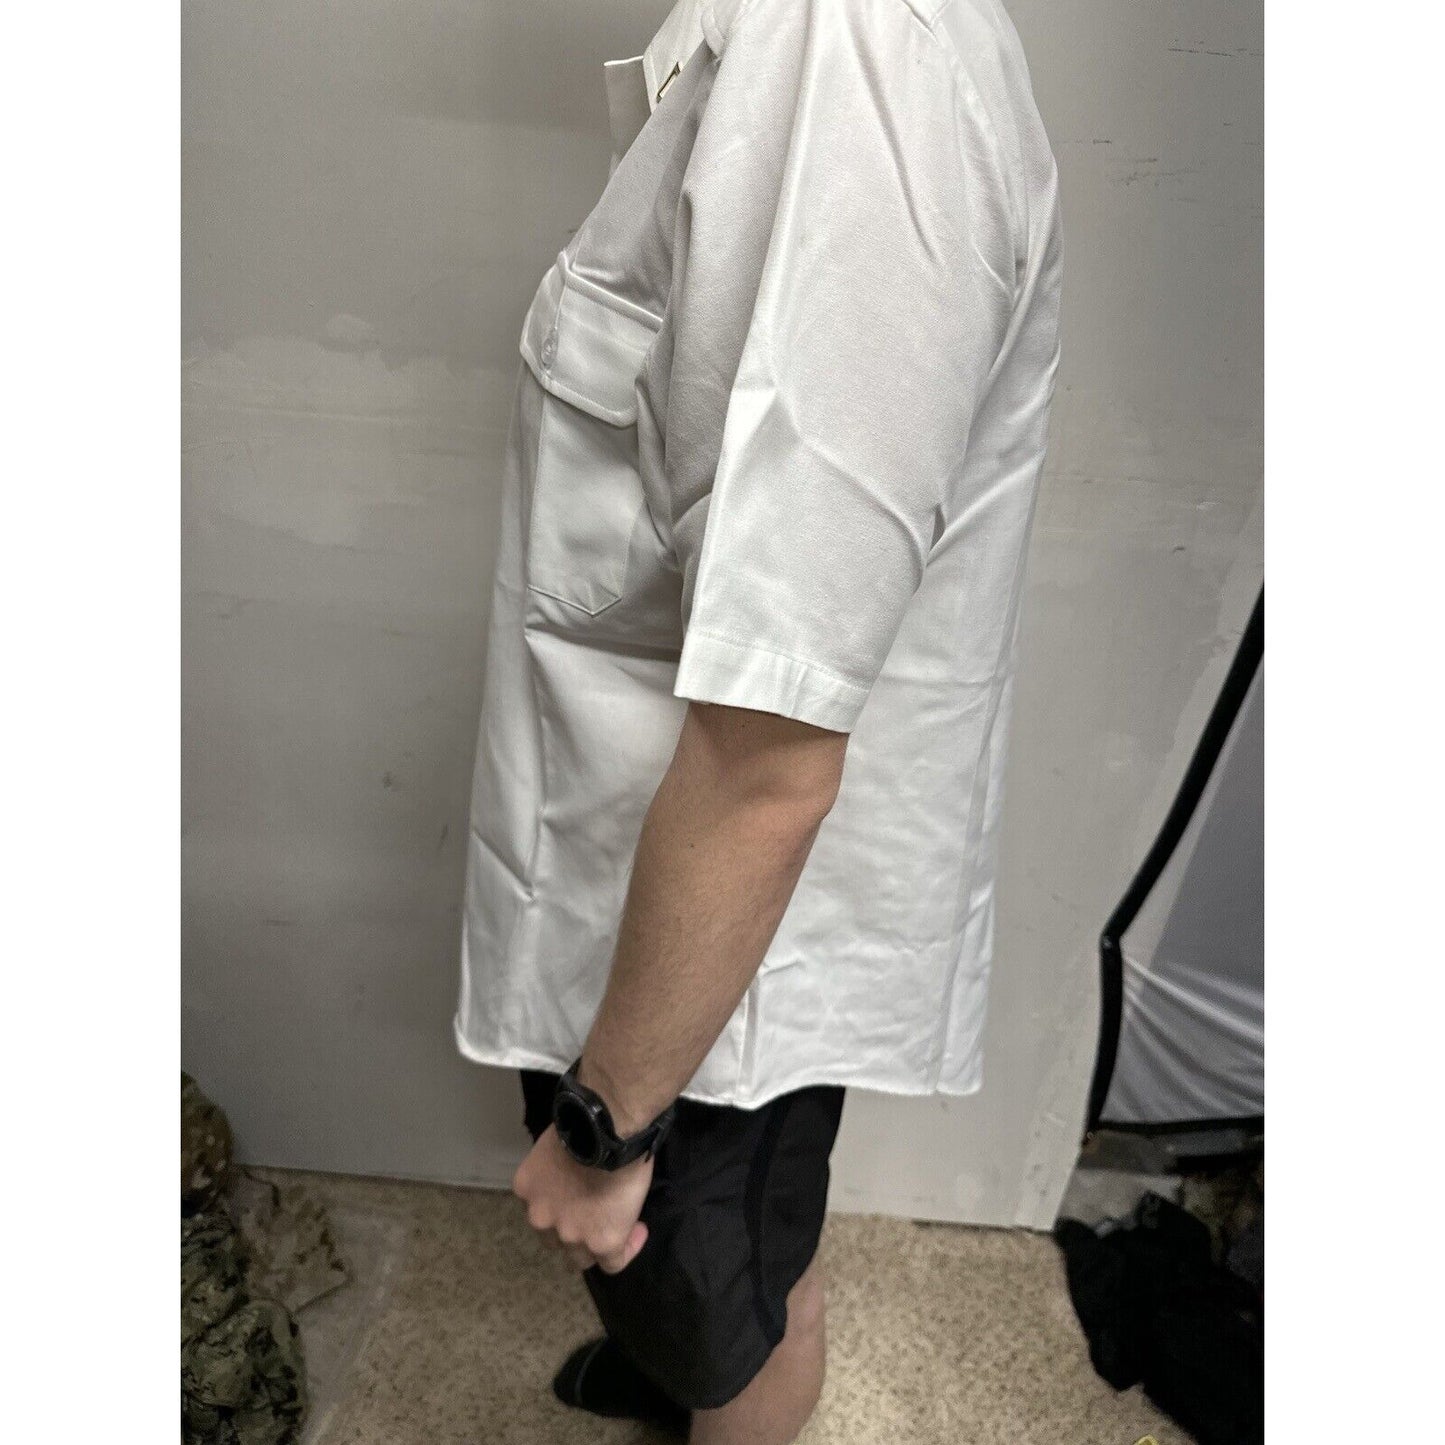 Army Men’s 16c Short Sleeve Button Up White Uniform Shirt